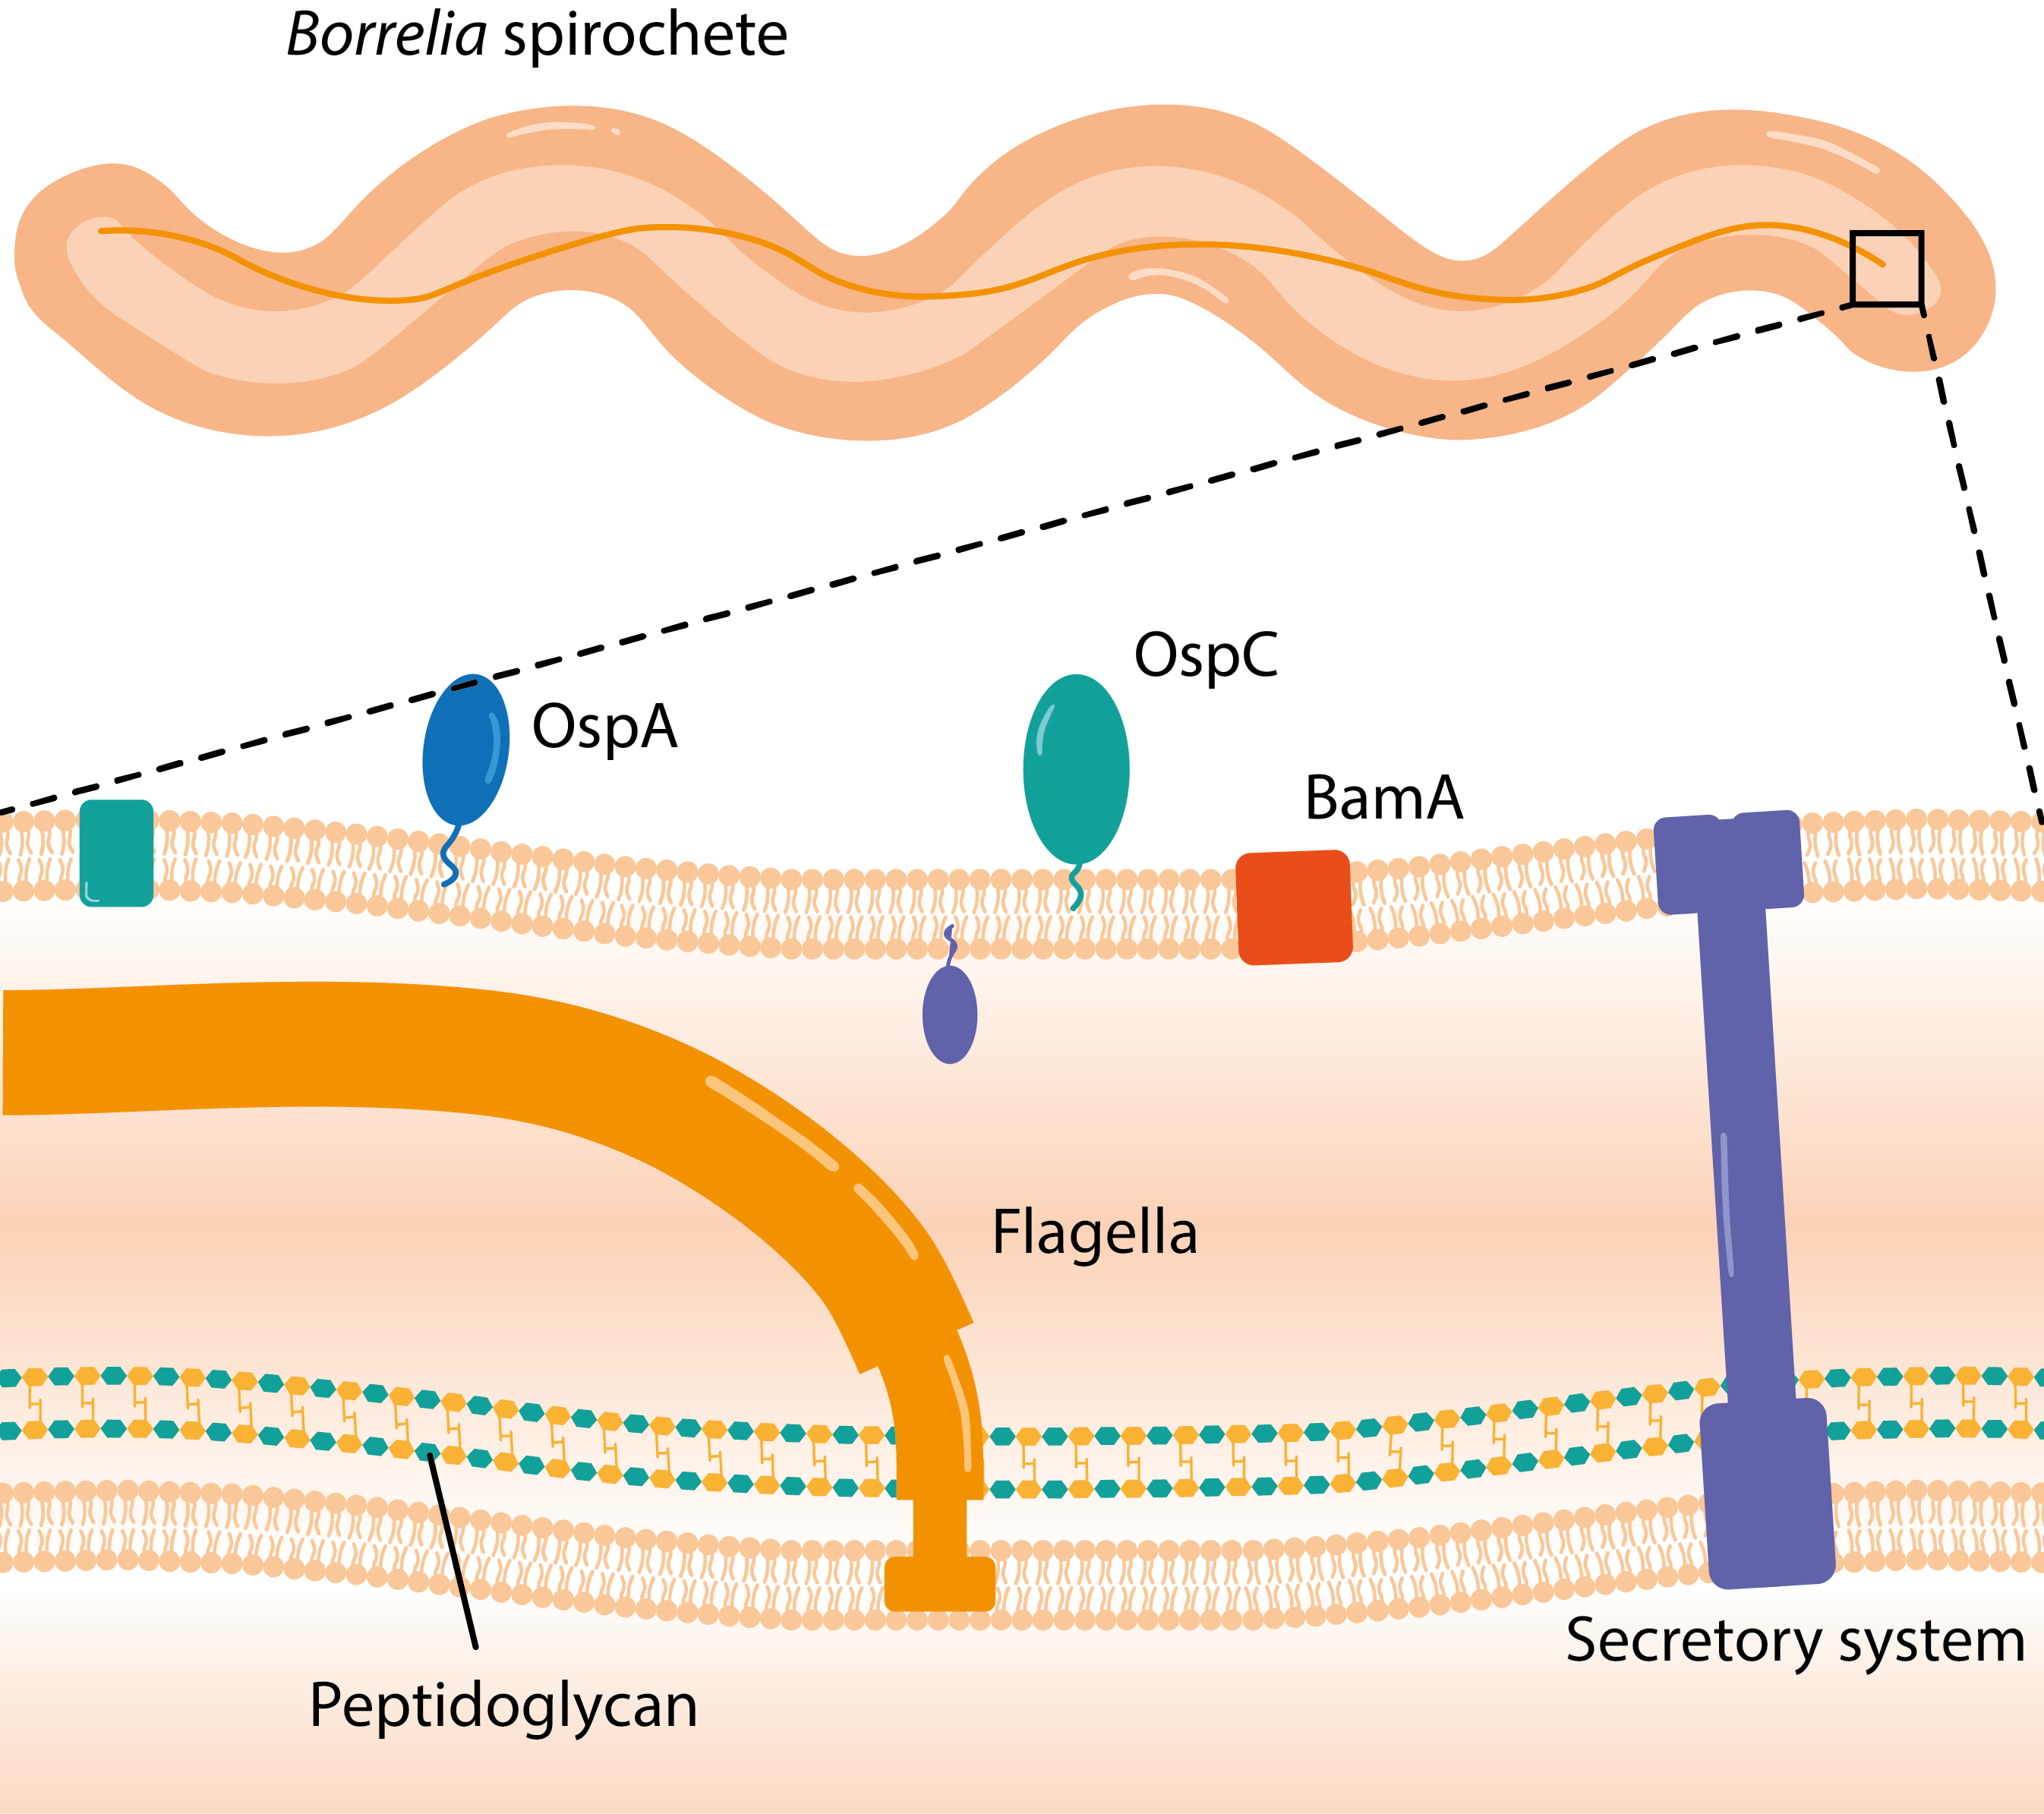 Diagram showing the membrane structure of Borrelia